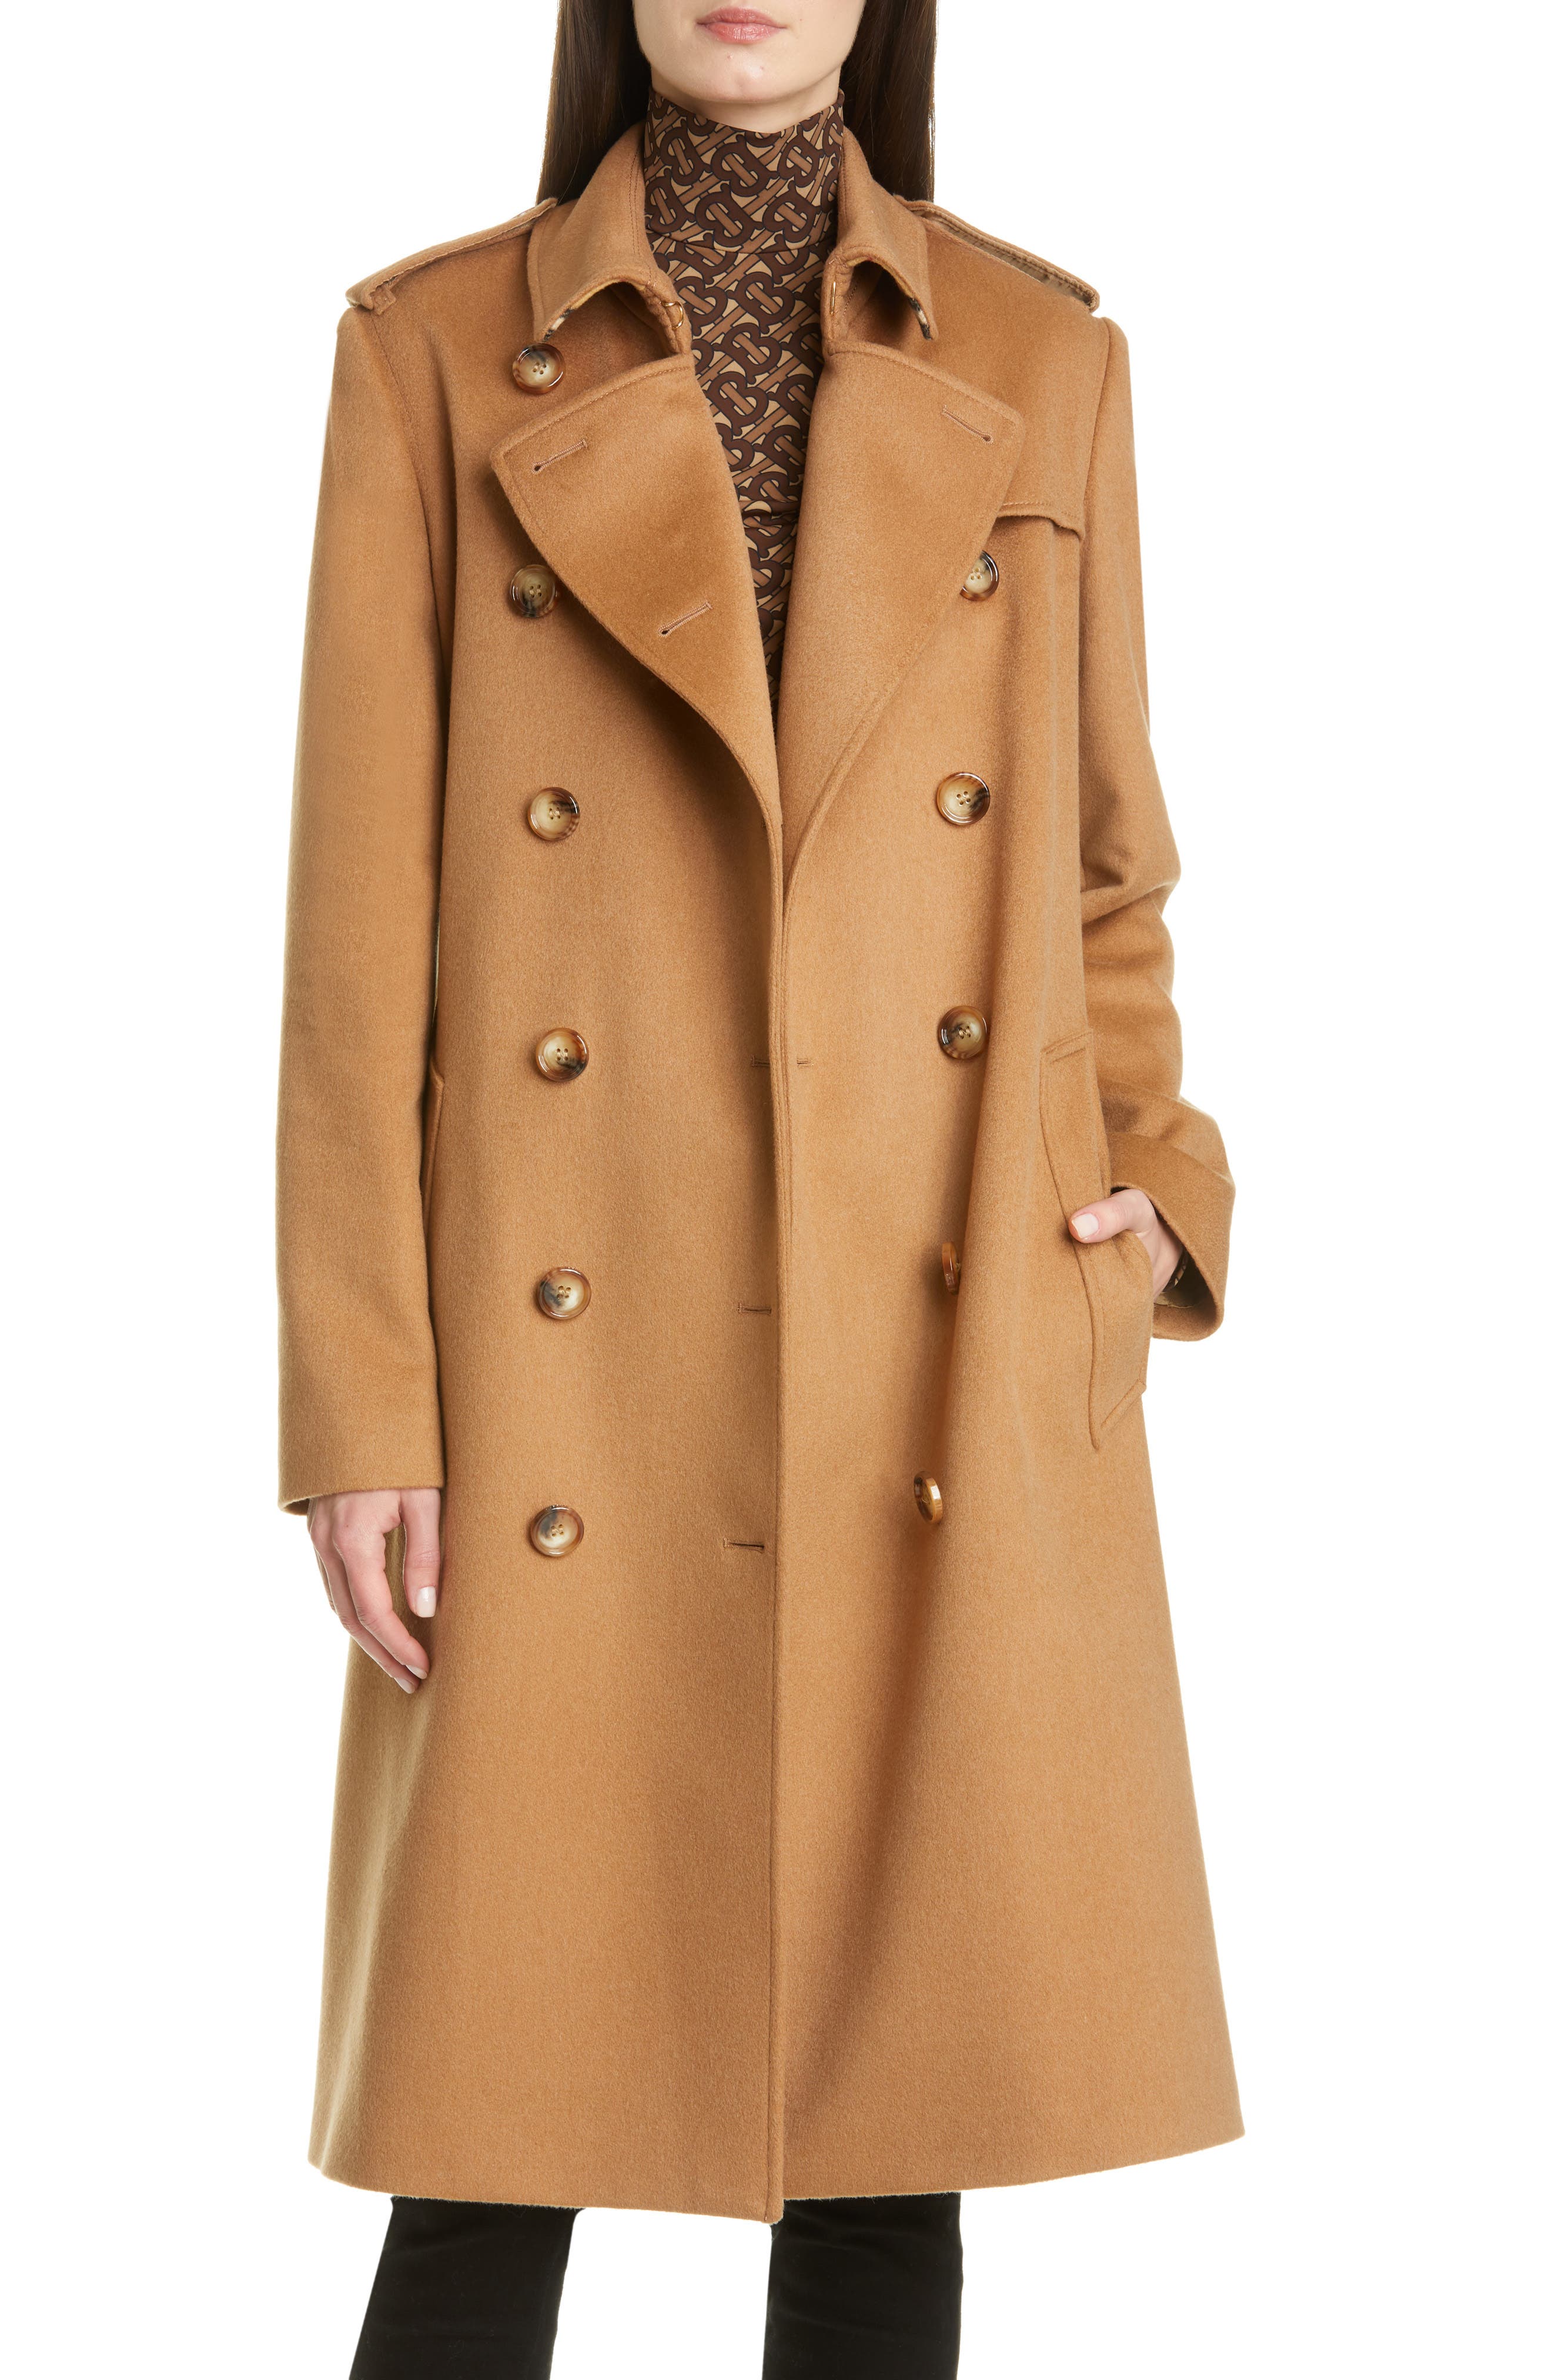 kensington cashmere trench coat